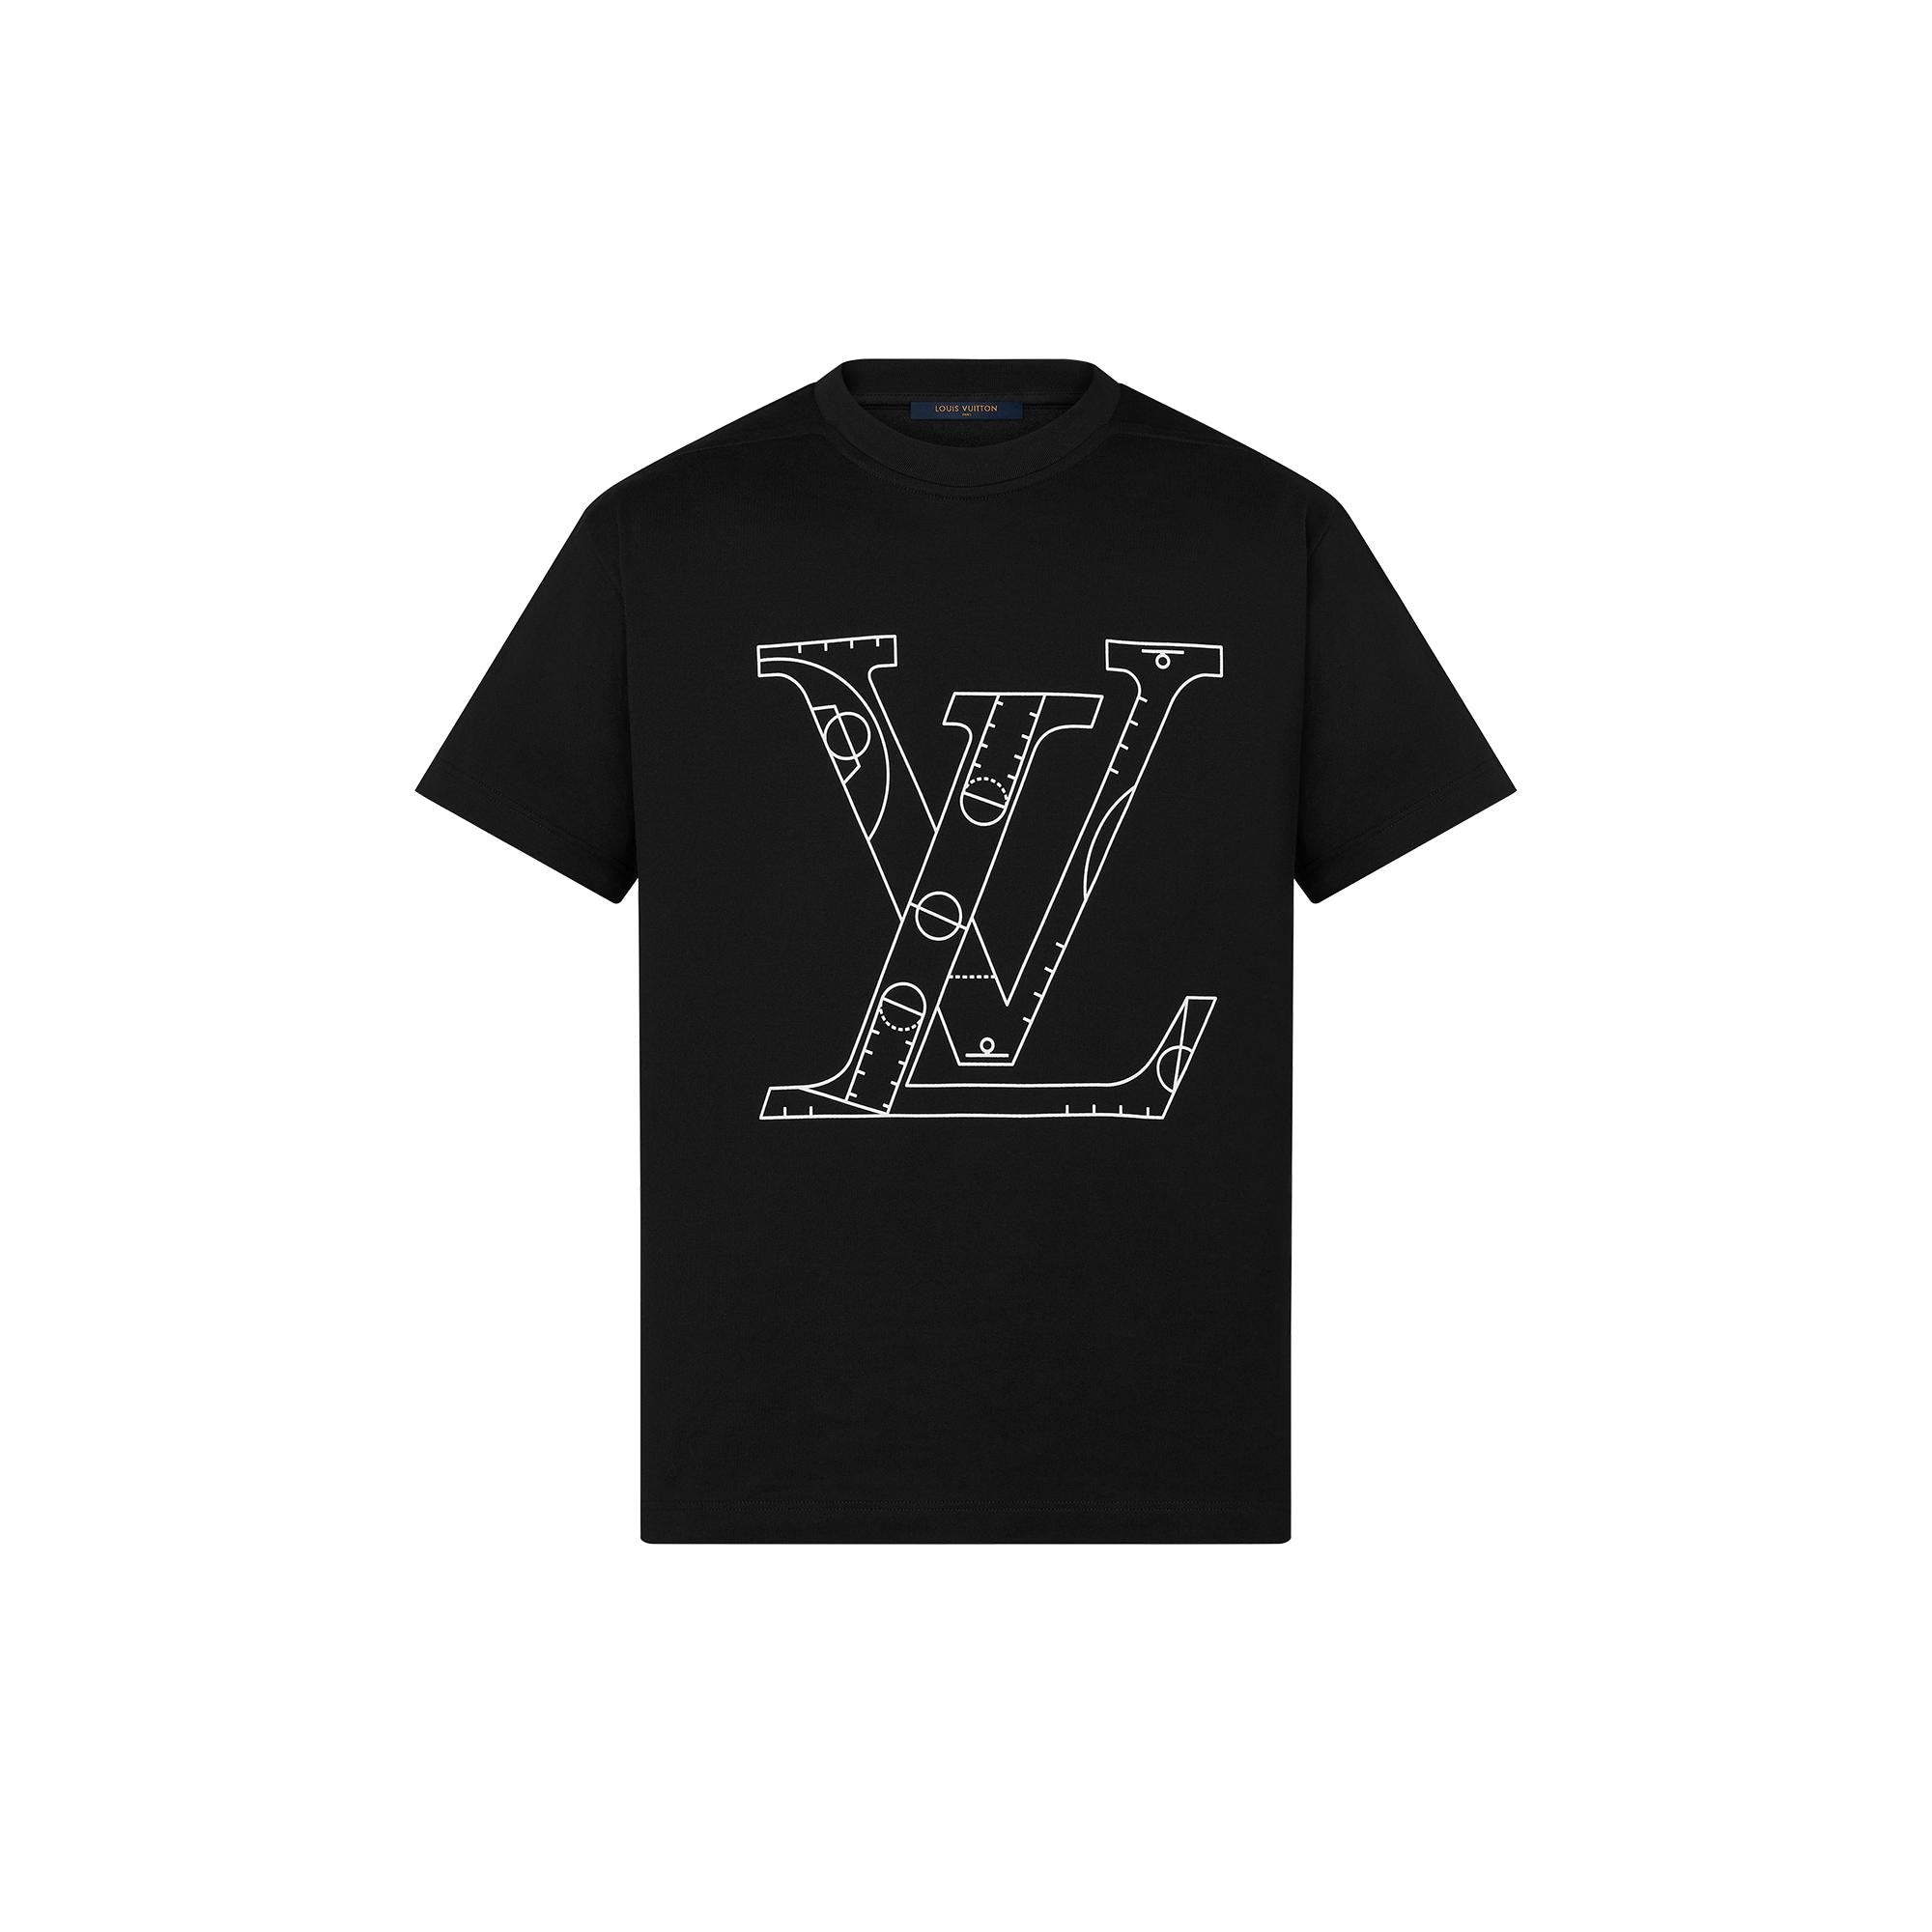 T-shirt Louis Vuitton X NBA Black size S International in Cotton - 35780394